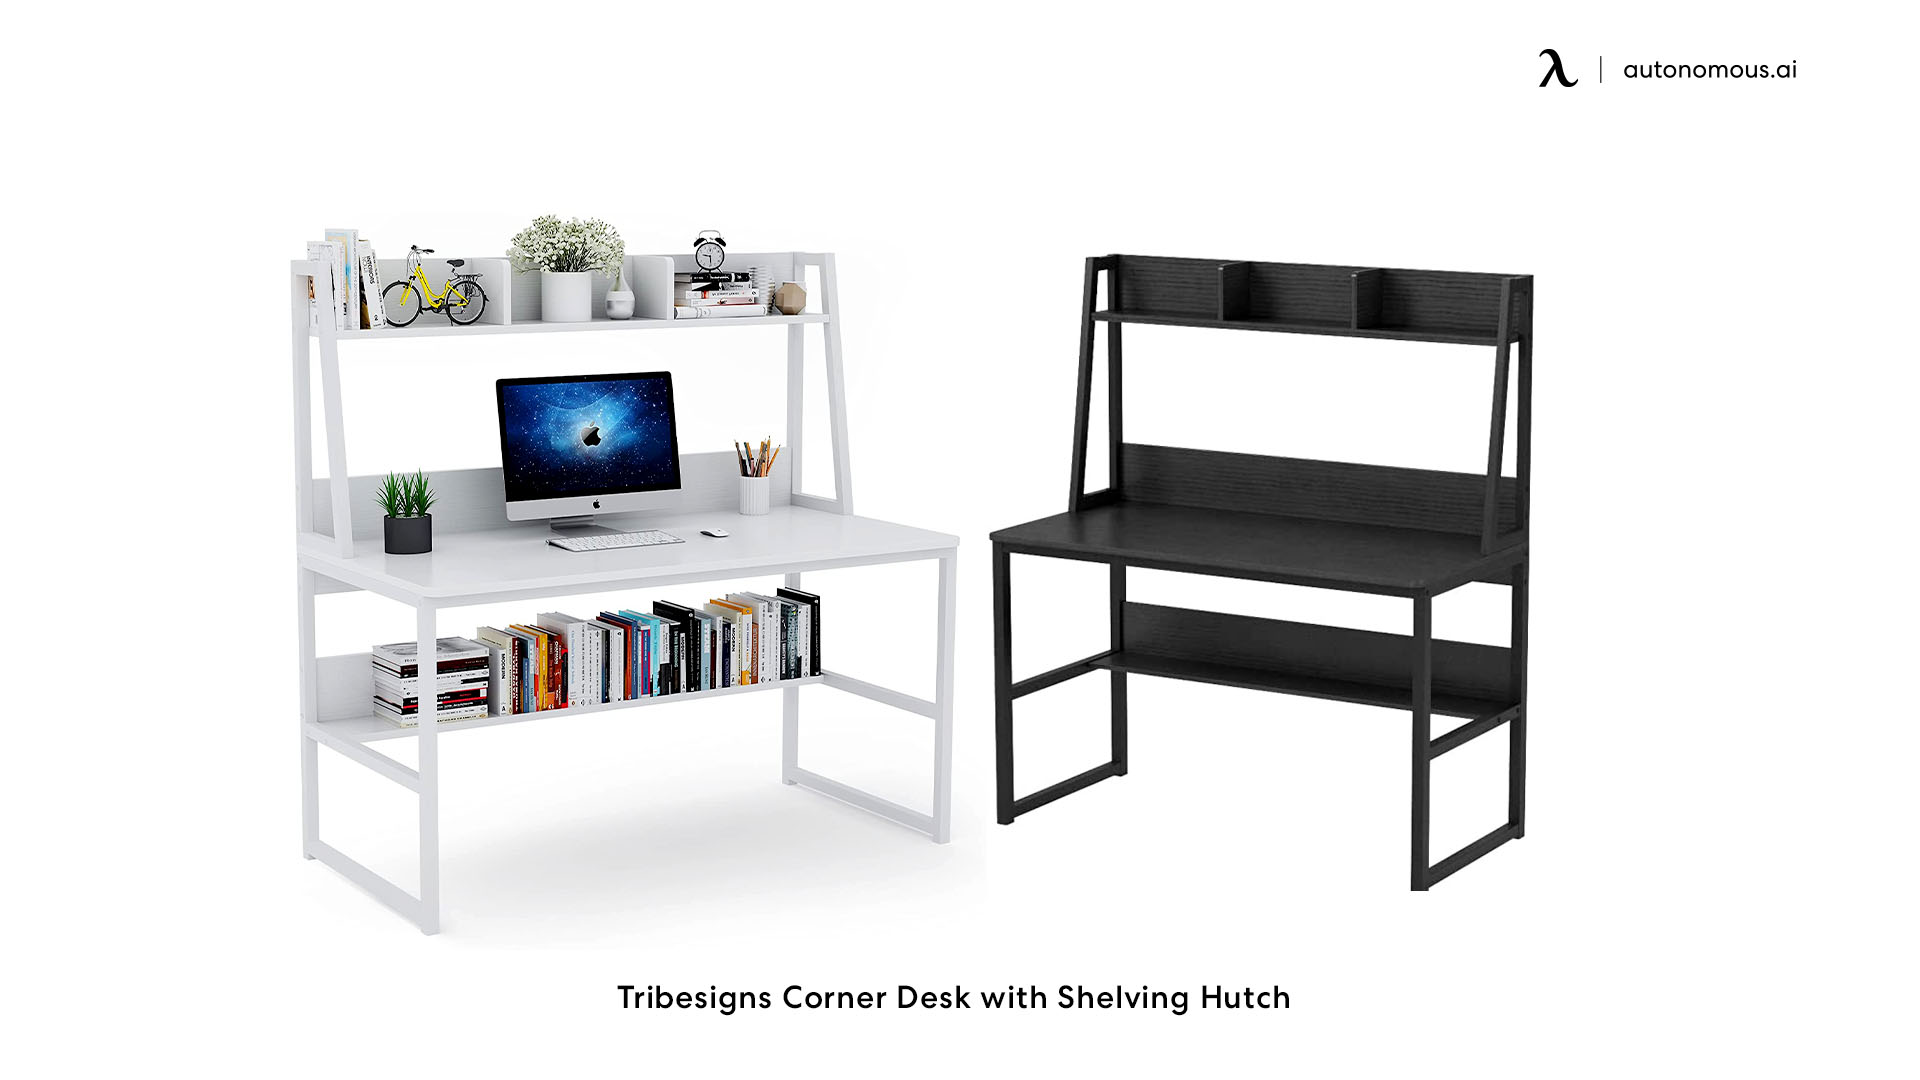 Tribesigns Corner Desk with Shelving Hutch